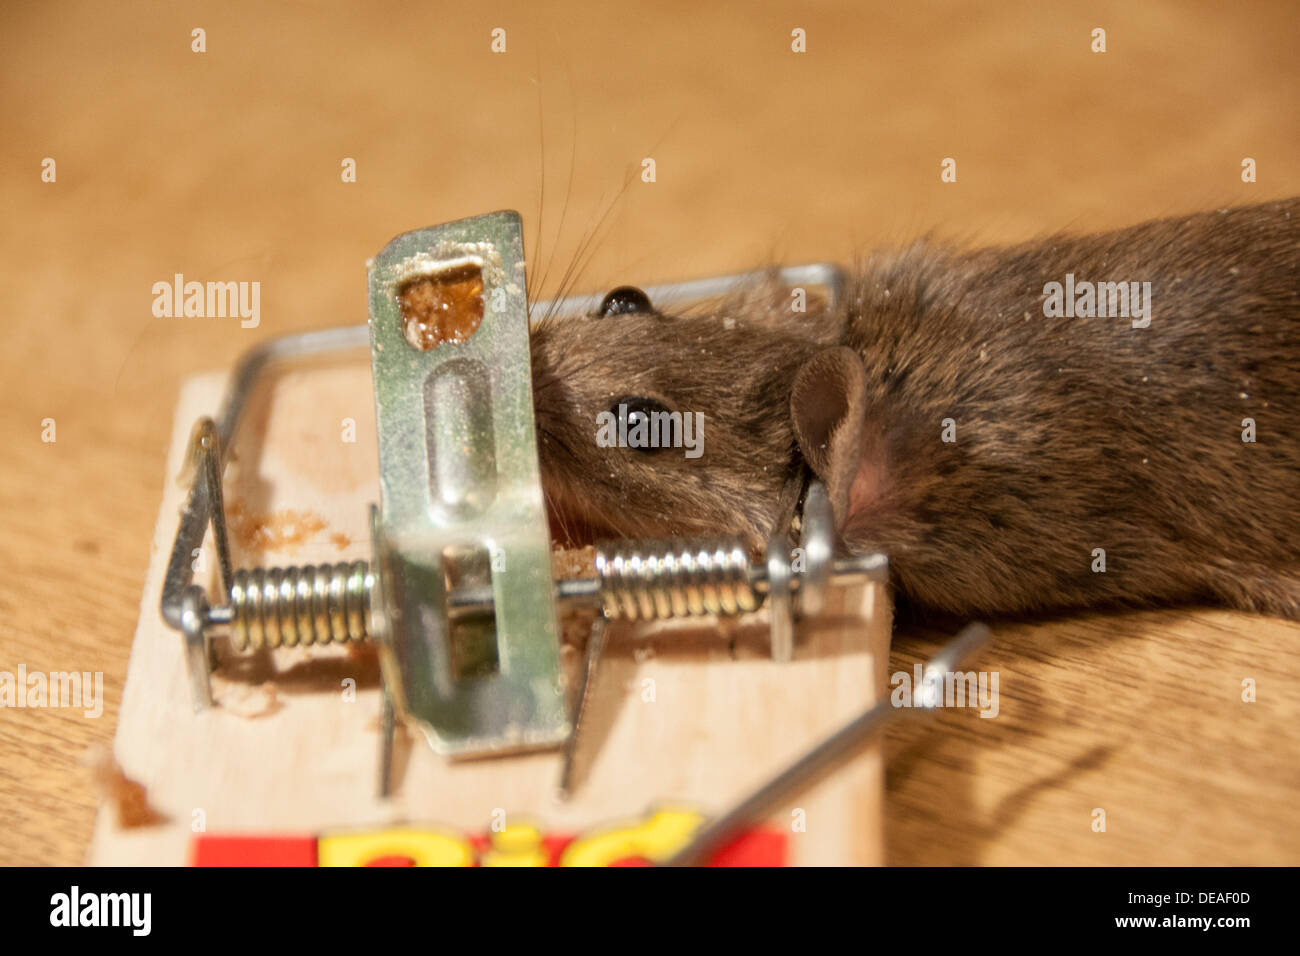 https://c8.alamy.com/comp/DEAF0D/mouse-caught-and-killed-in-spring-trap-DEAF0D.jpg